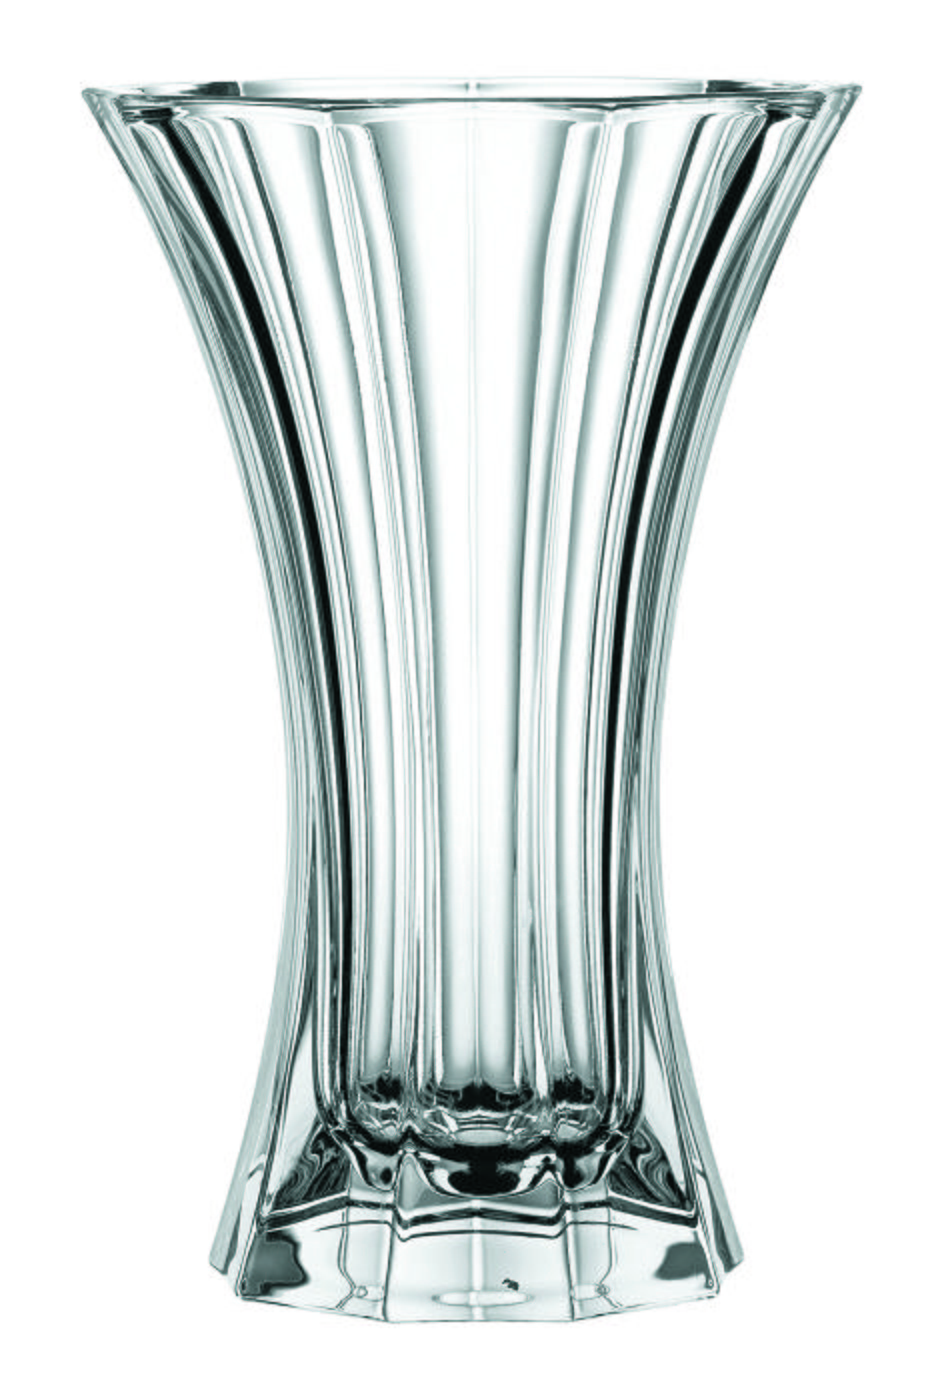 Vase Saphir aus Glas - Klar, MODERN, Glas (16,6/24,0/16,6cm) - Nachtmann